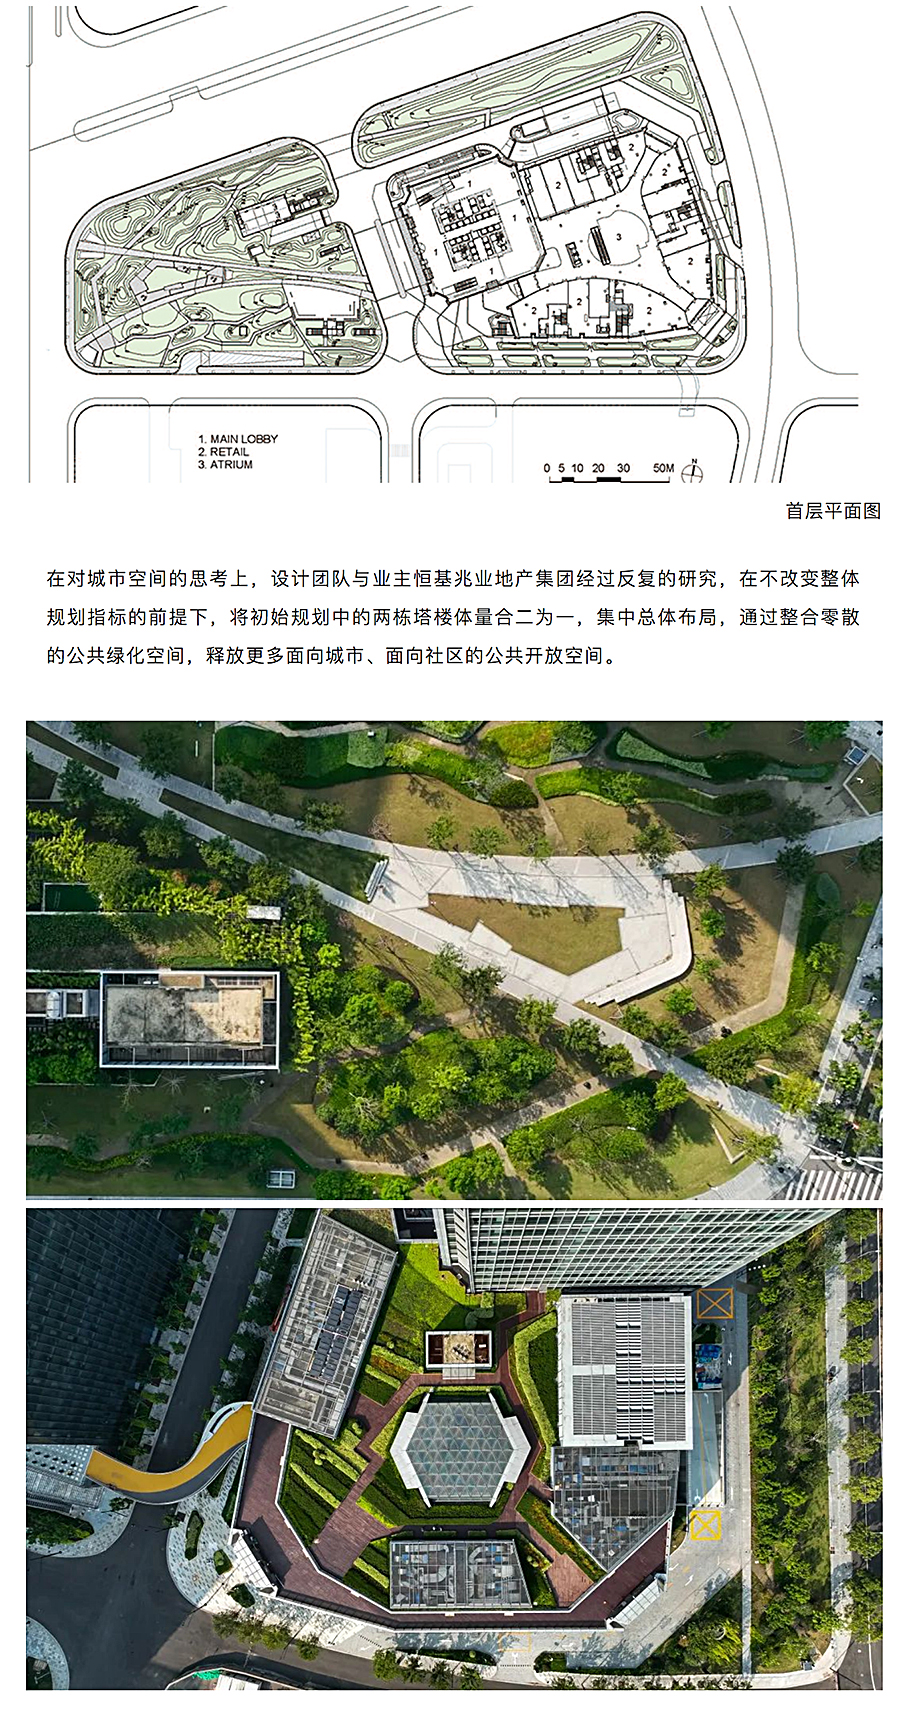 Renewal-Zone：Gensler作品︱星扬西岸中心：塑造城市韧性未来，融合引领品质空间_0003_图层-4.jpg